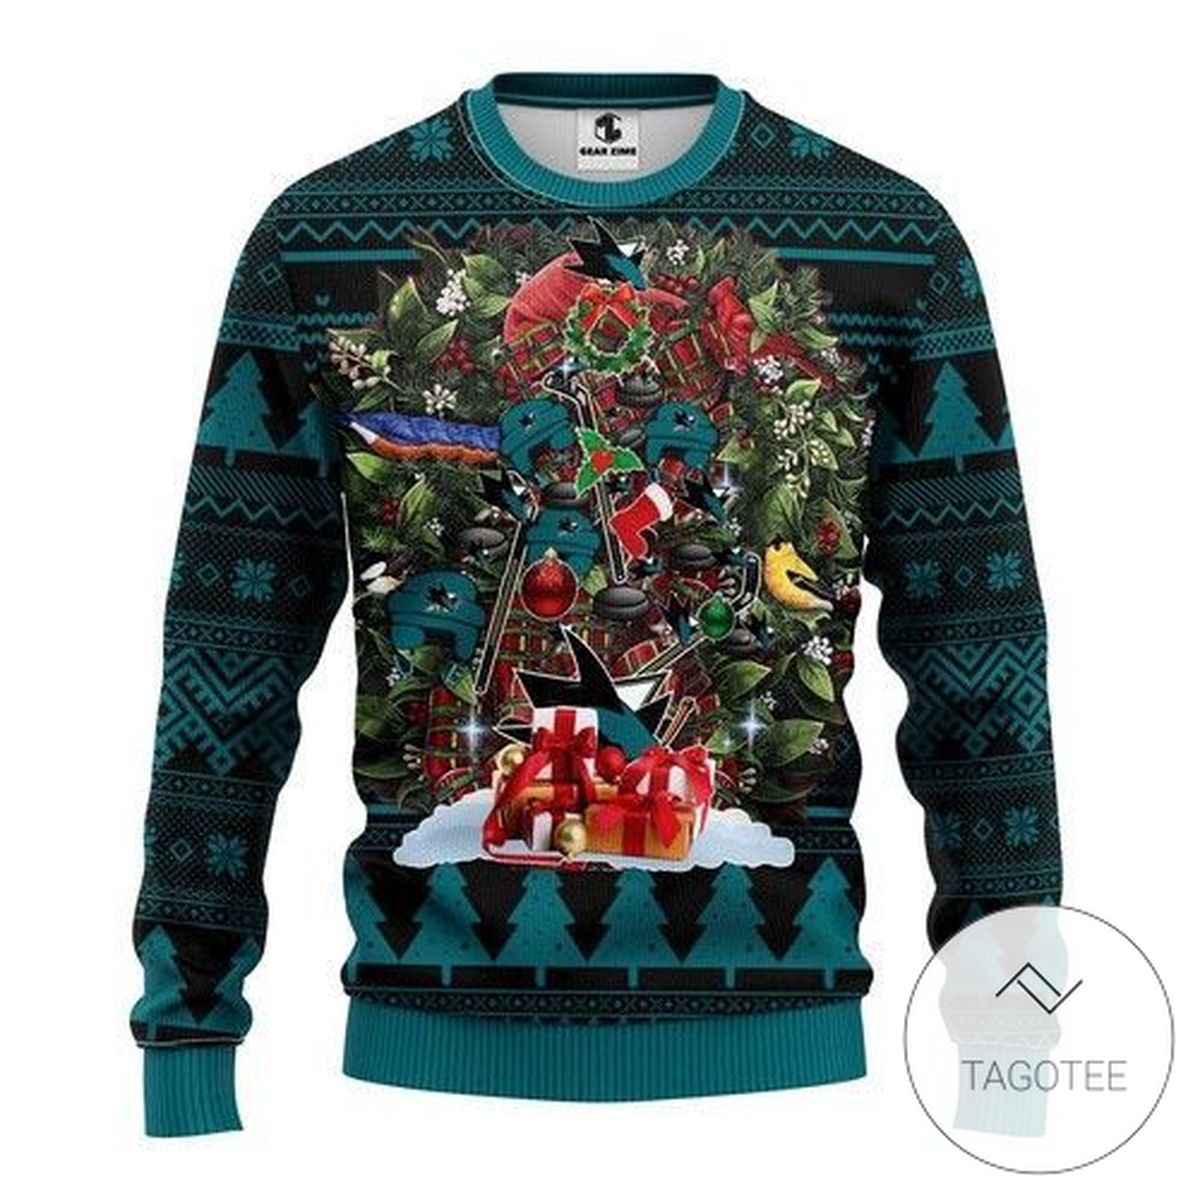 Nhl San Jose Sharks Sweatshirt Knitted Ugly Christmas Sweater